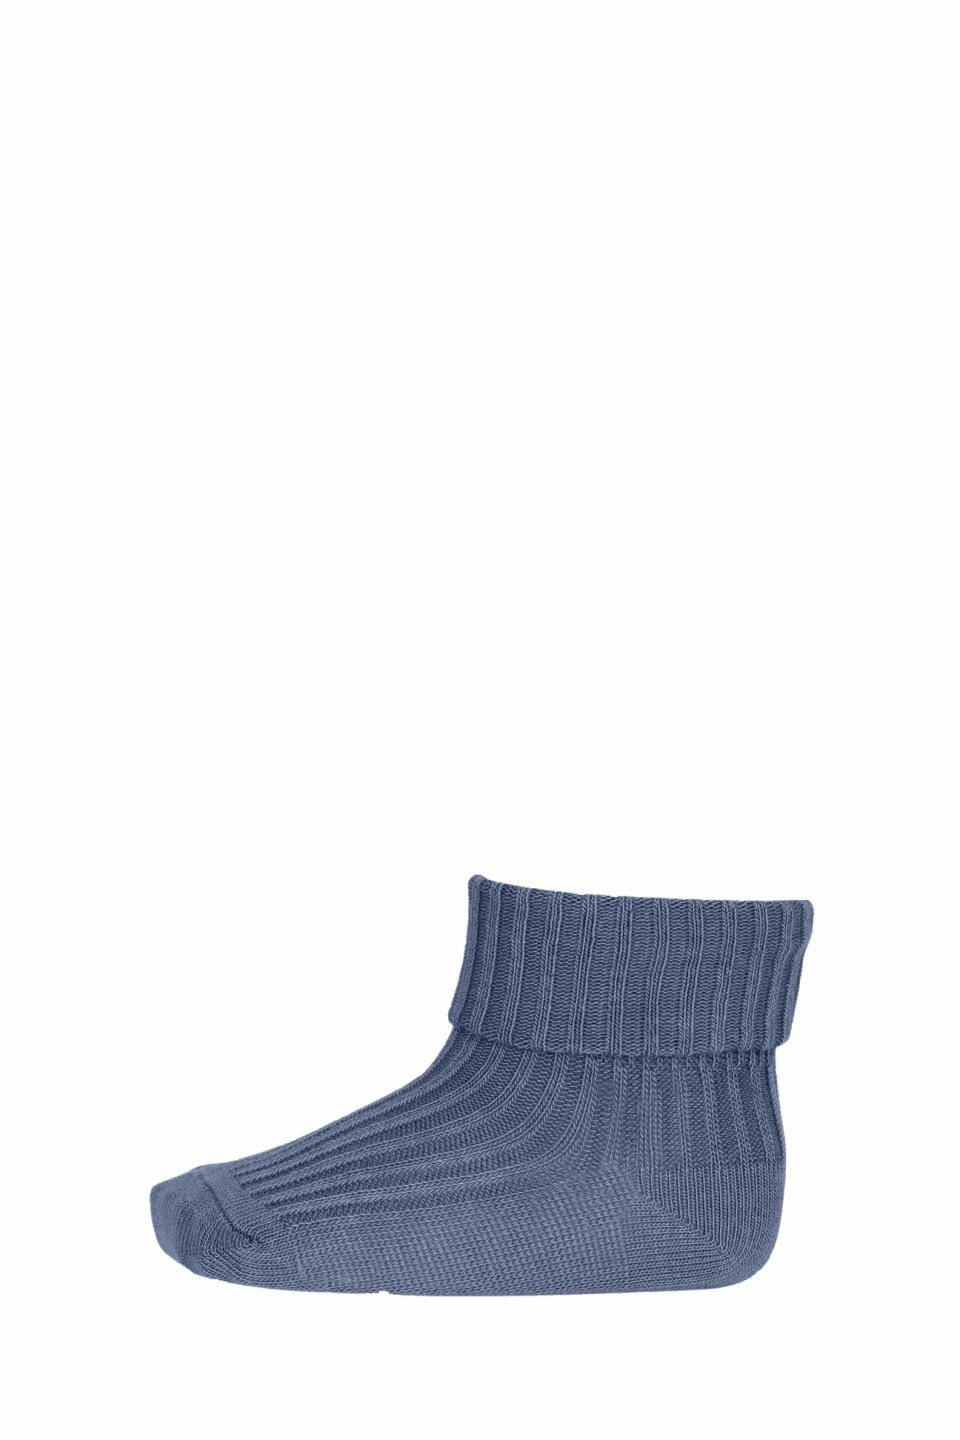 MP Denmark - cotton rib socks - 10-533-0 4222 - stone blue - Hyggekids